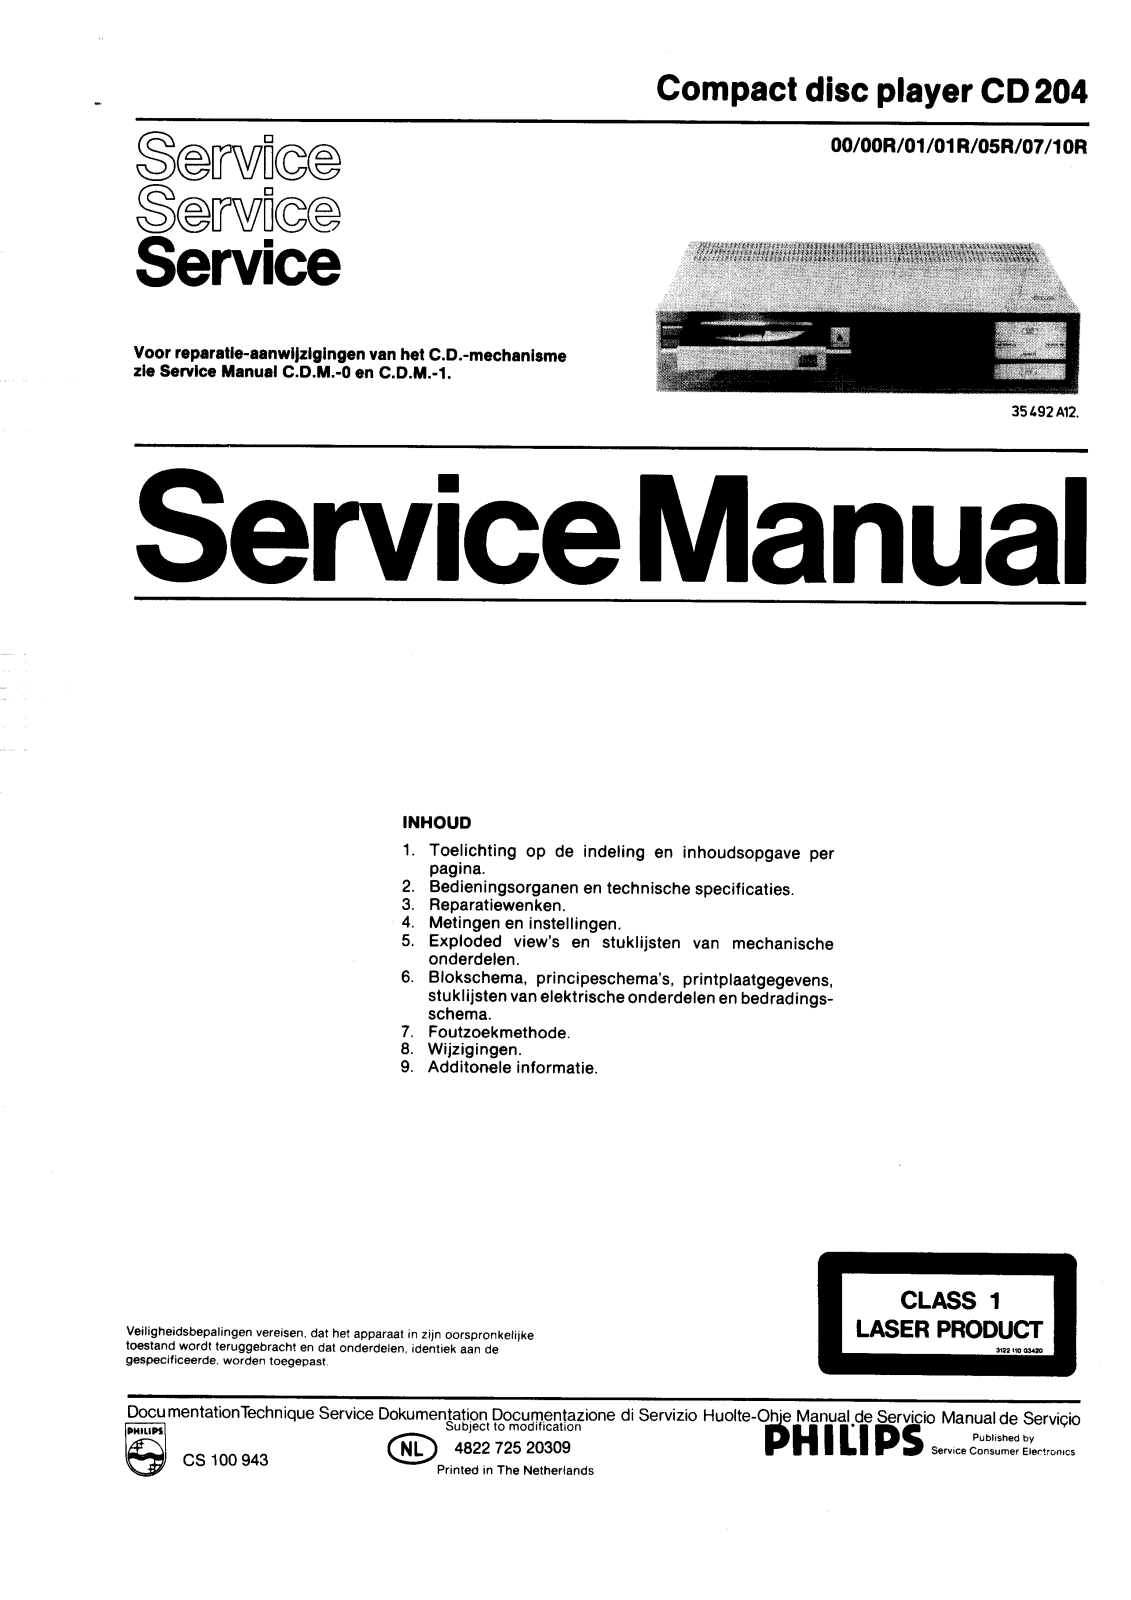 Philips CD-204 Service manual